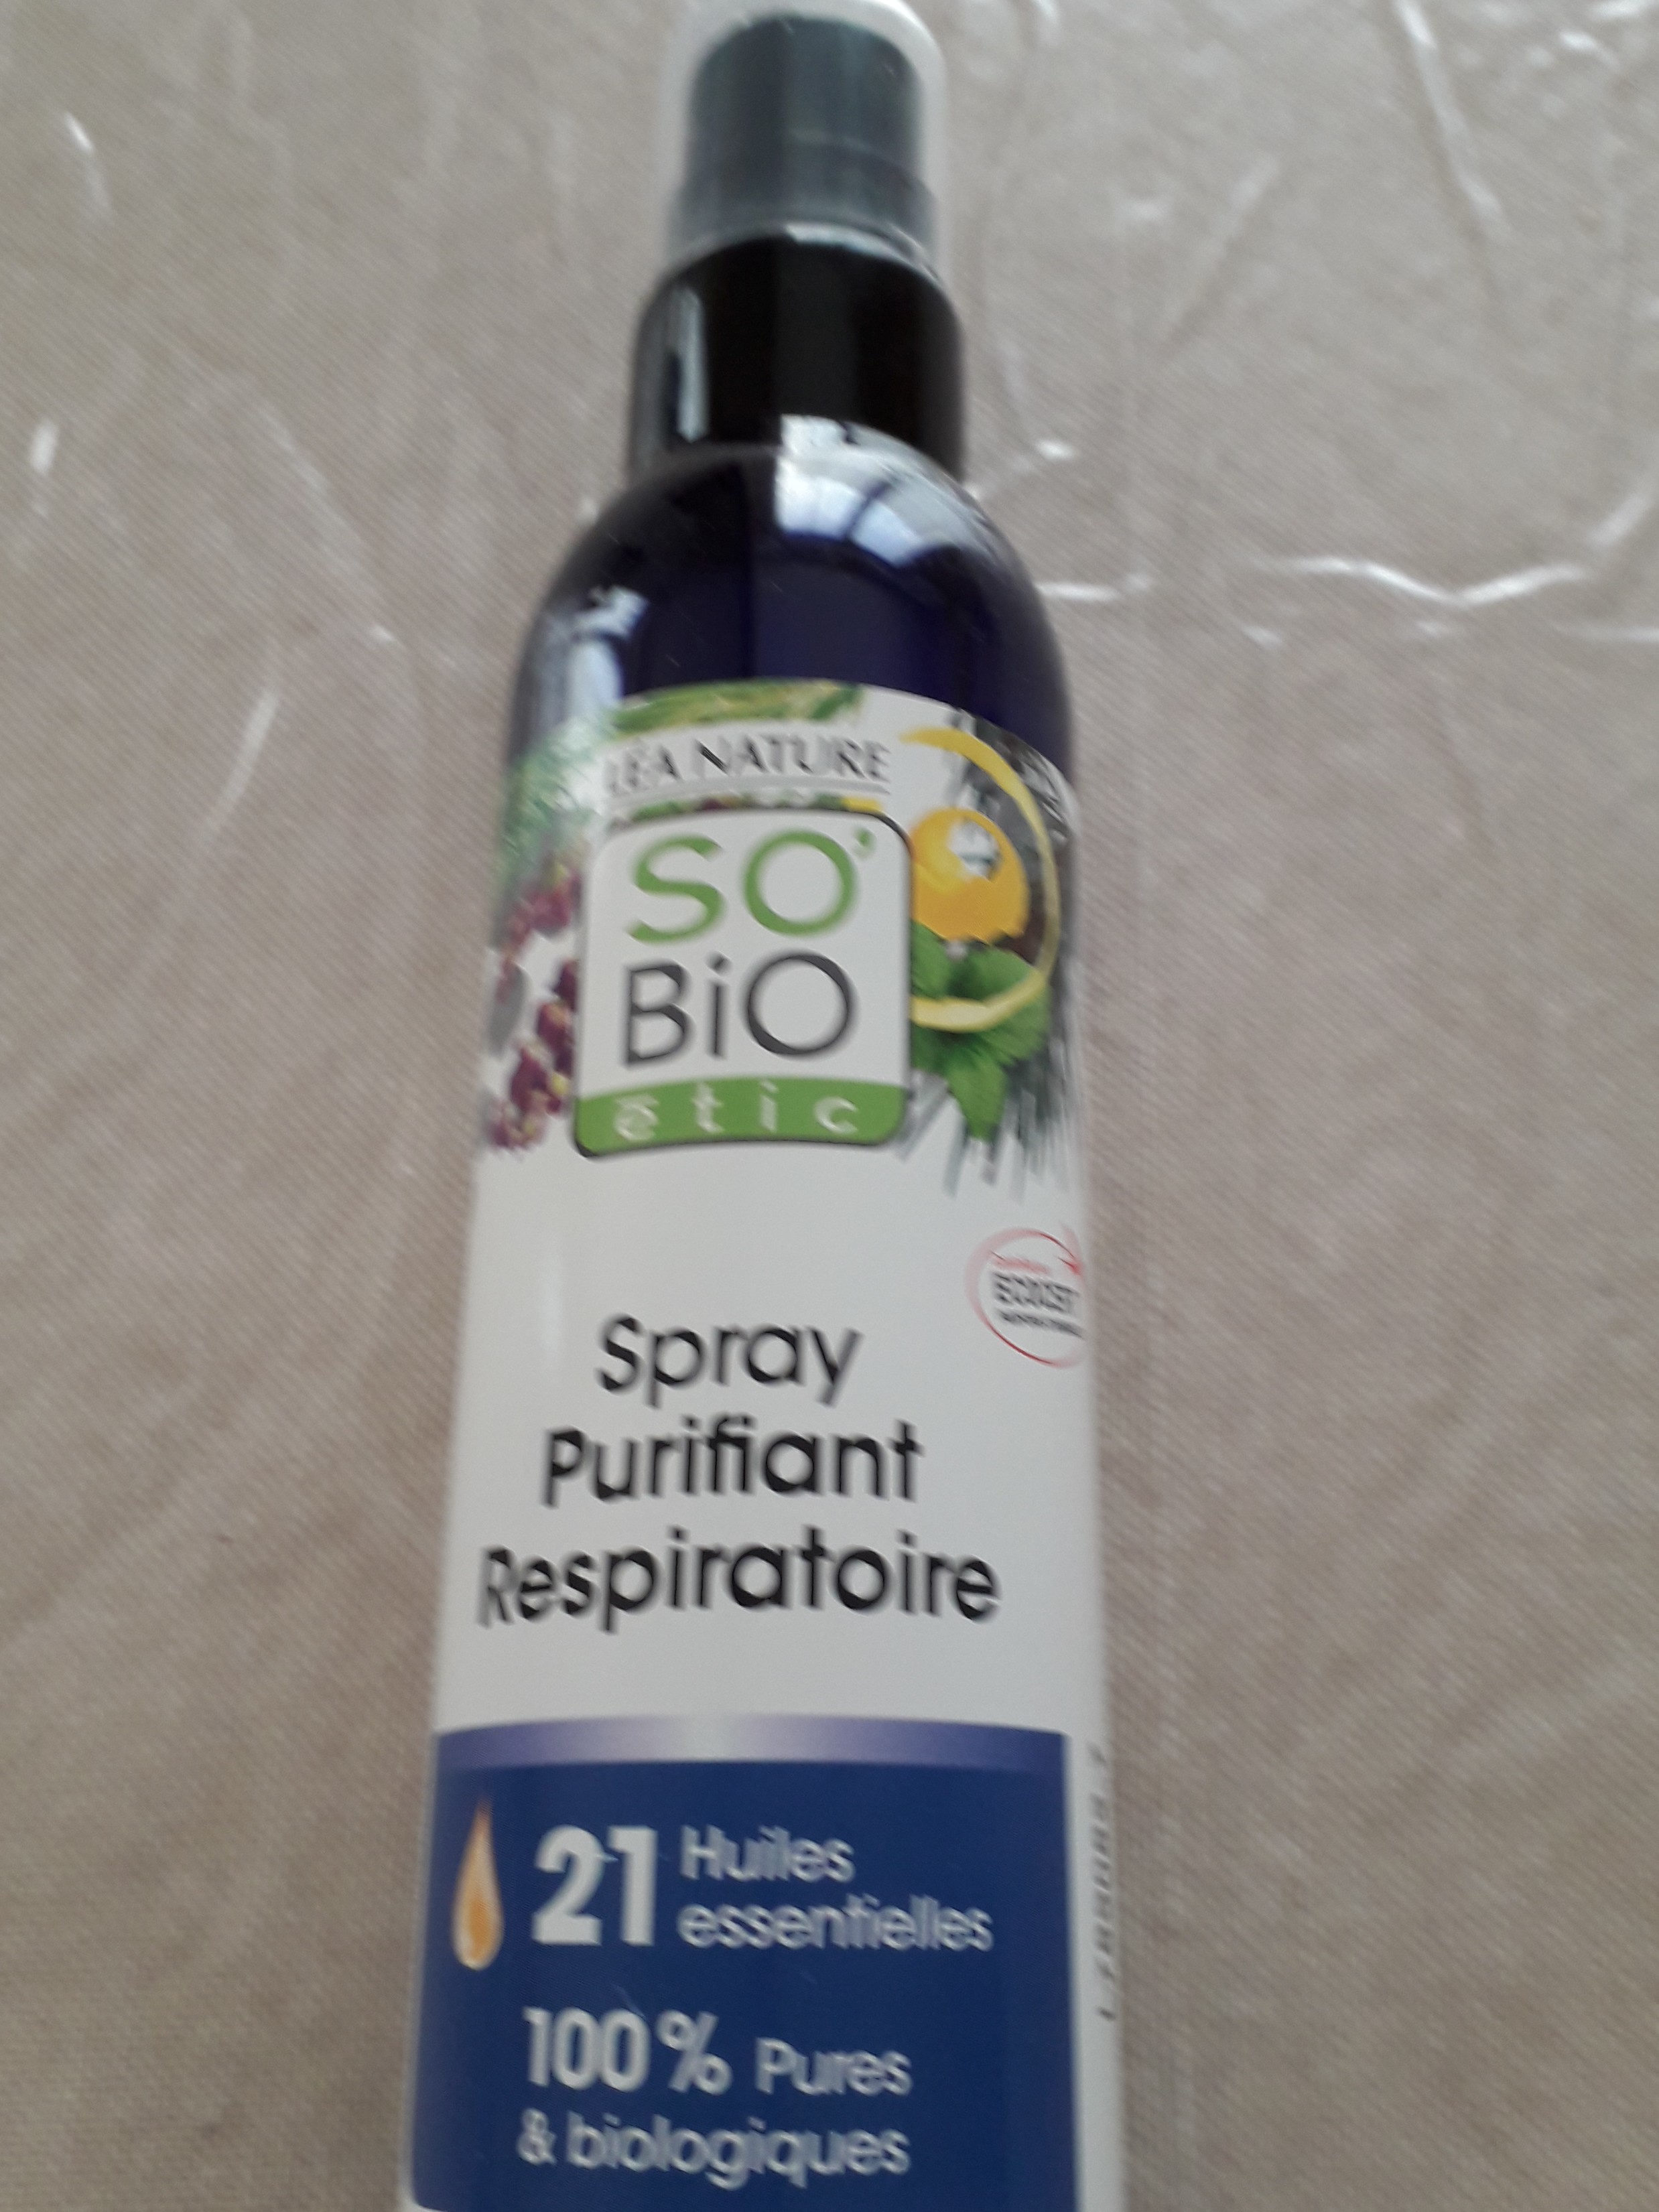 Spray Purifiant Respiratoire - Produkt - fr